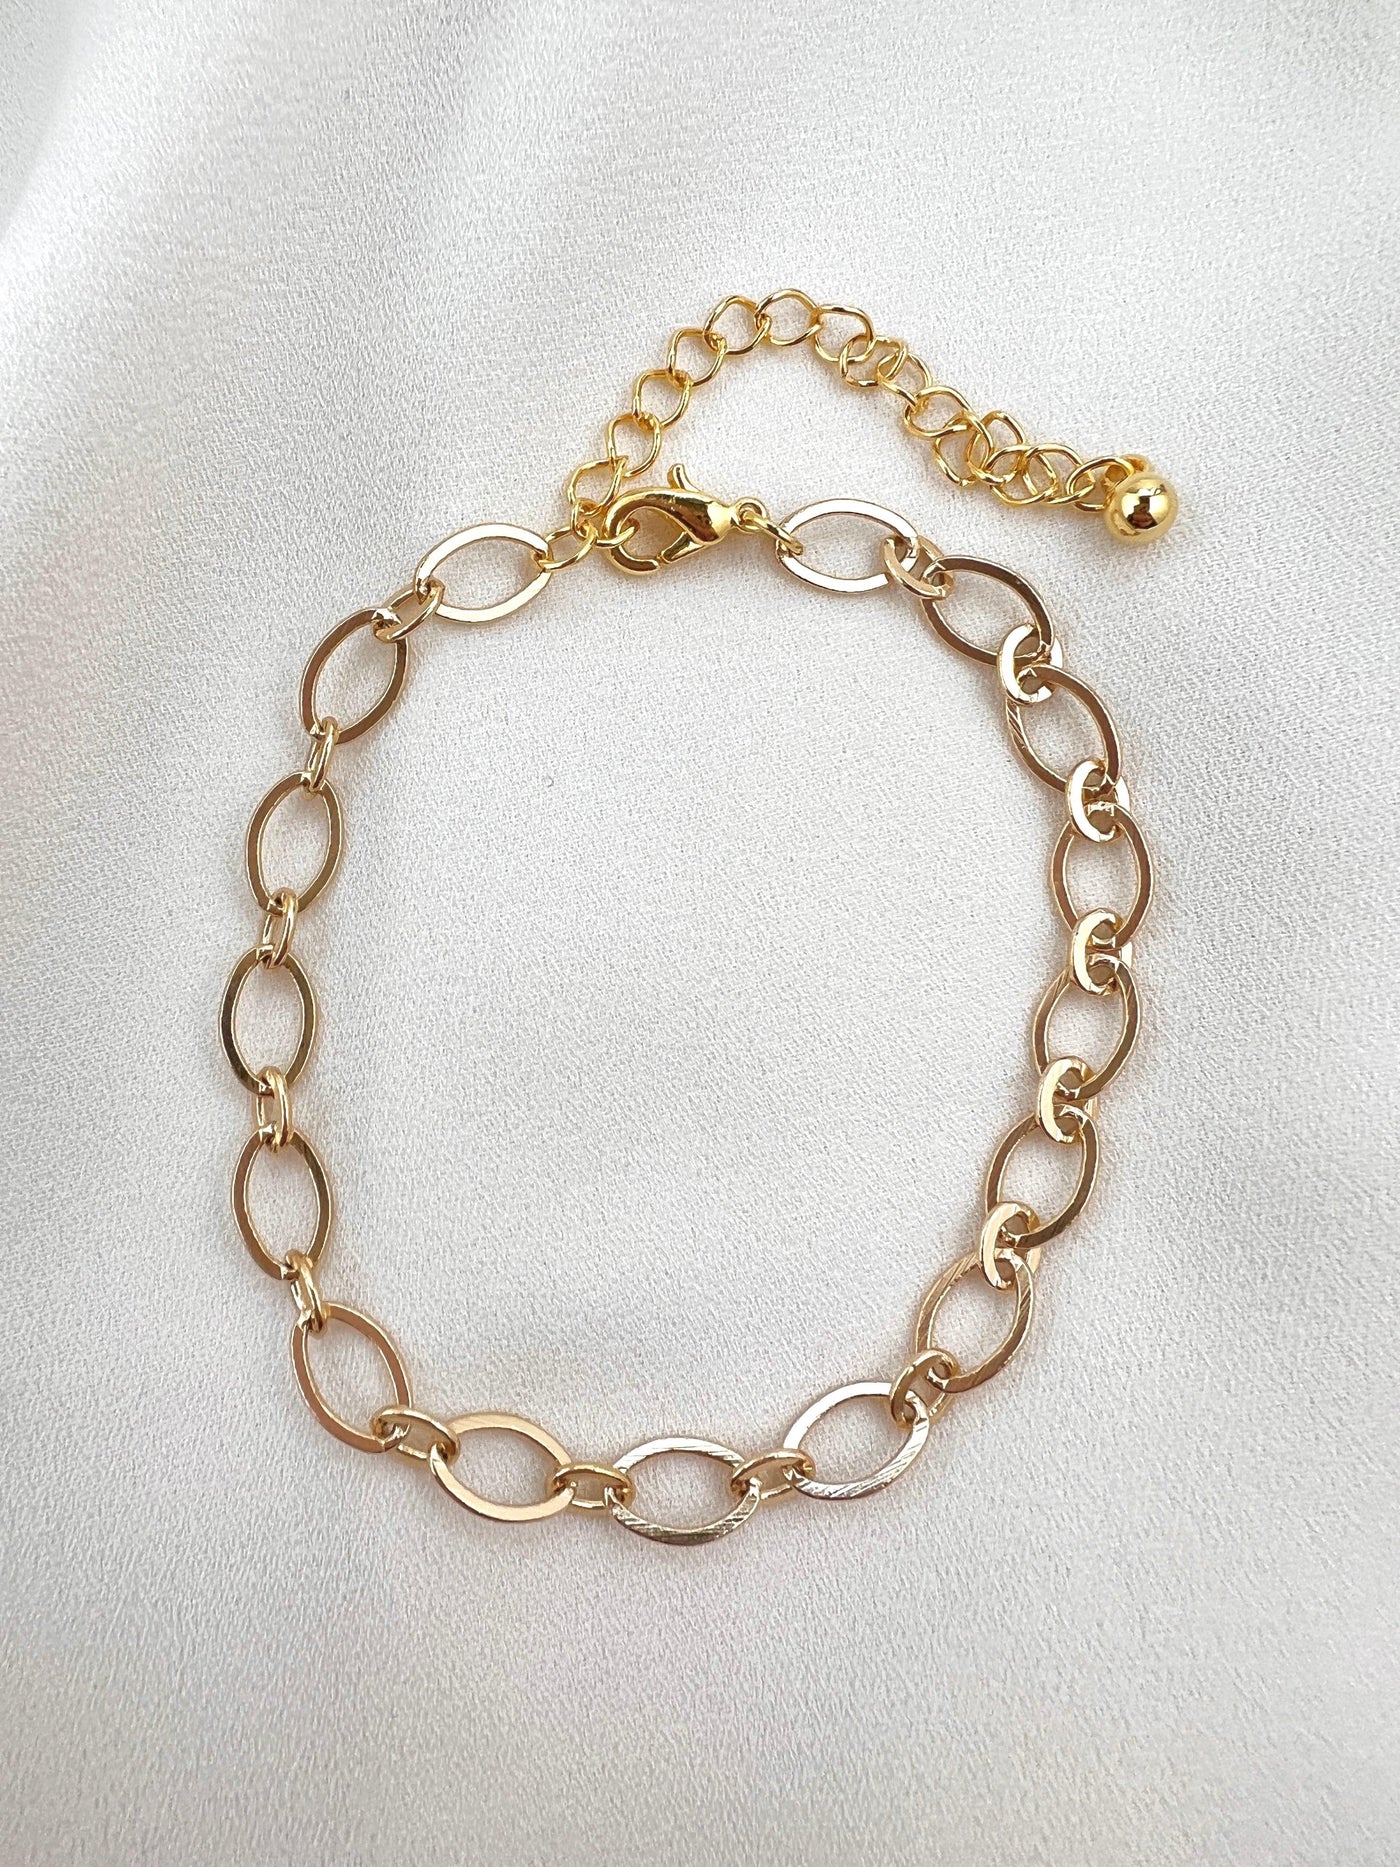 Gold Oval Link Chain Bracelet